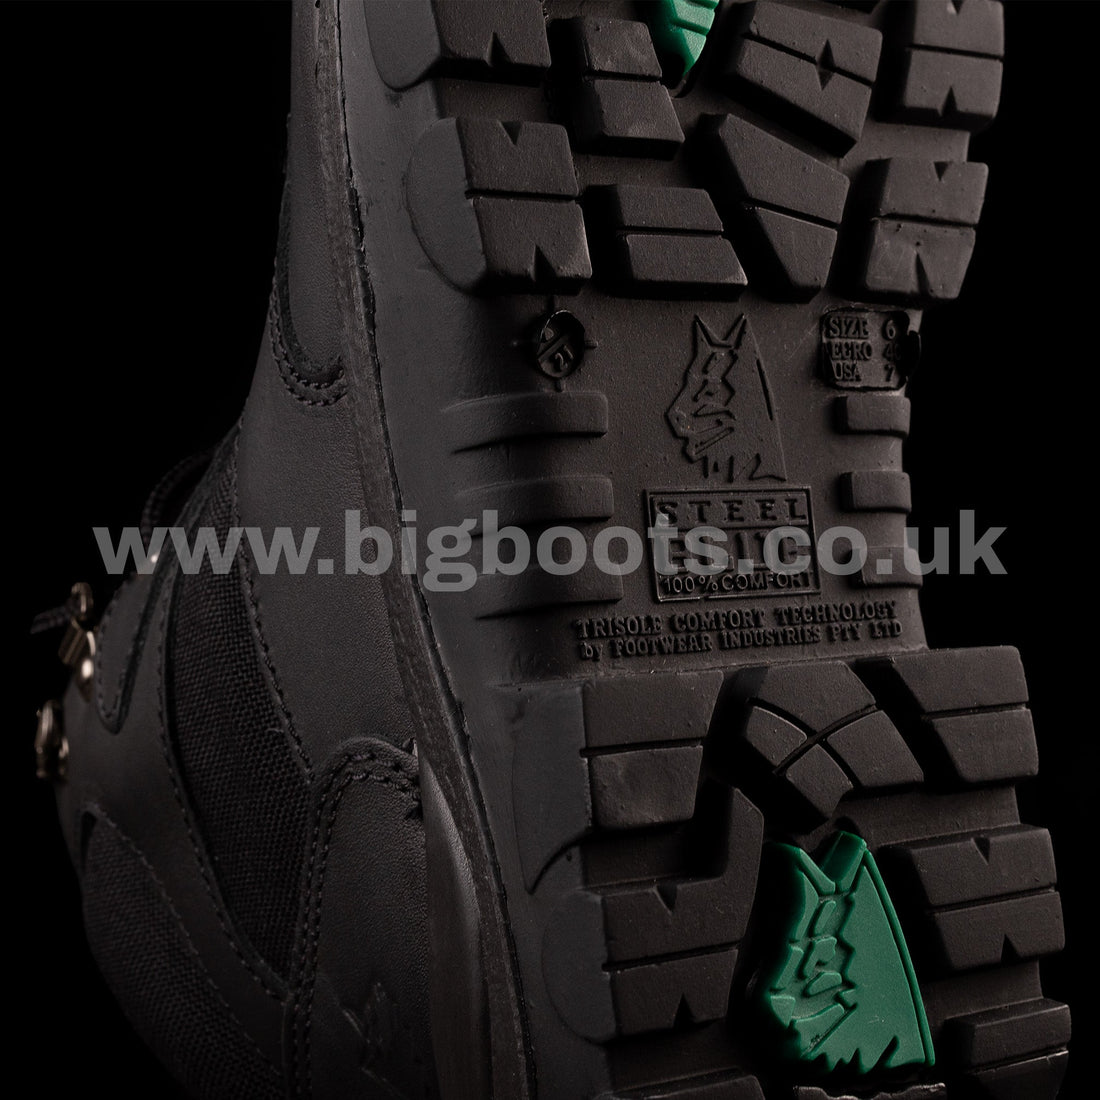 Steel Blue Mens Work Boots Parkes Zip Scuff S3 - Black - BIG Boots UK